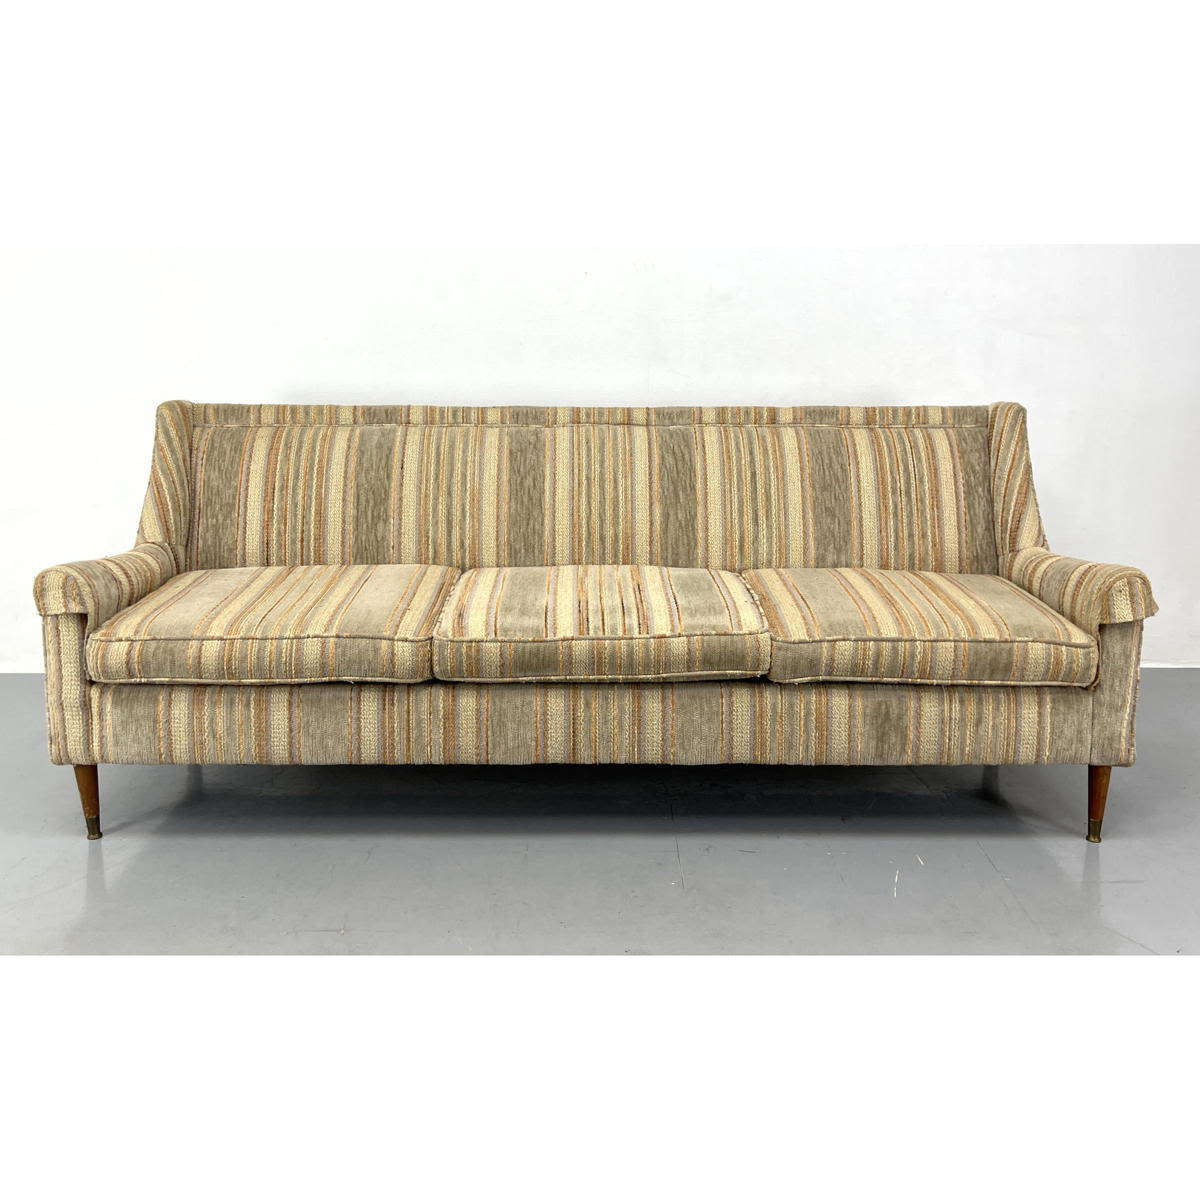 7 ft Upholstered Modernist Sofa 2a7844